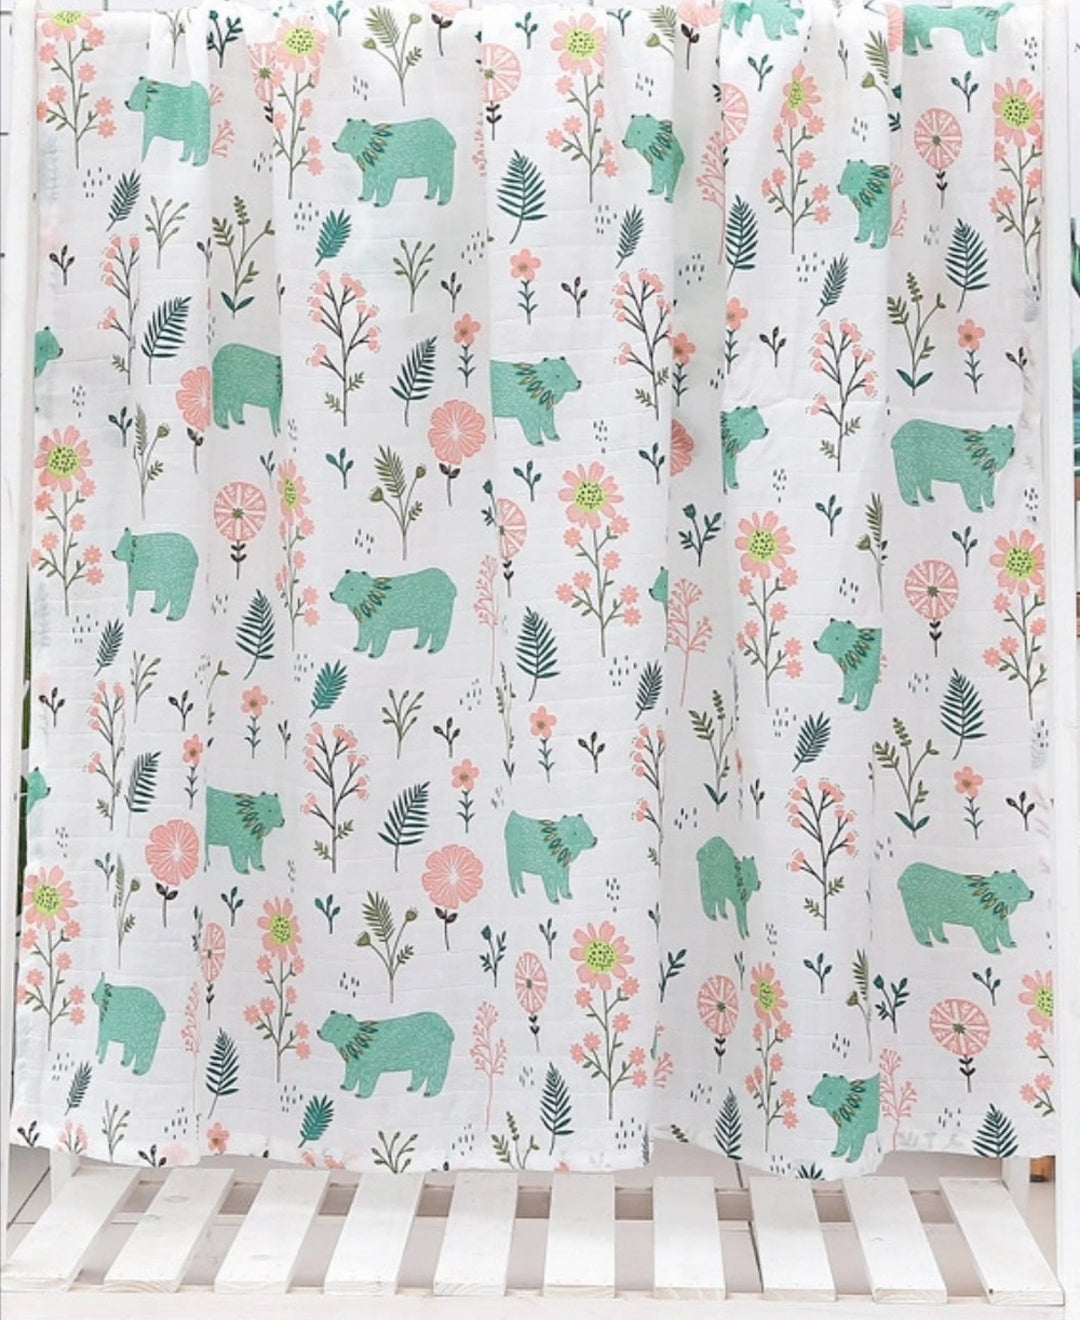 Swaddle Blanket Cotton & Bamboo - Green Bear | قماط قطني مع بامبو - دب أخضر